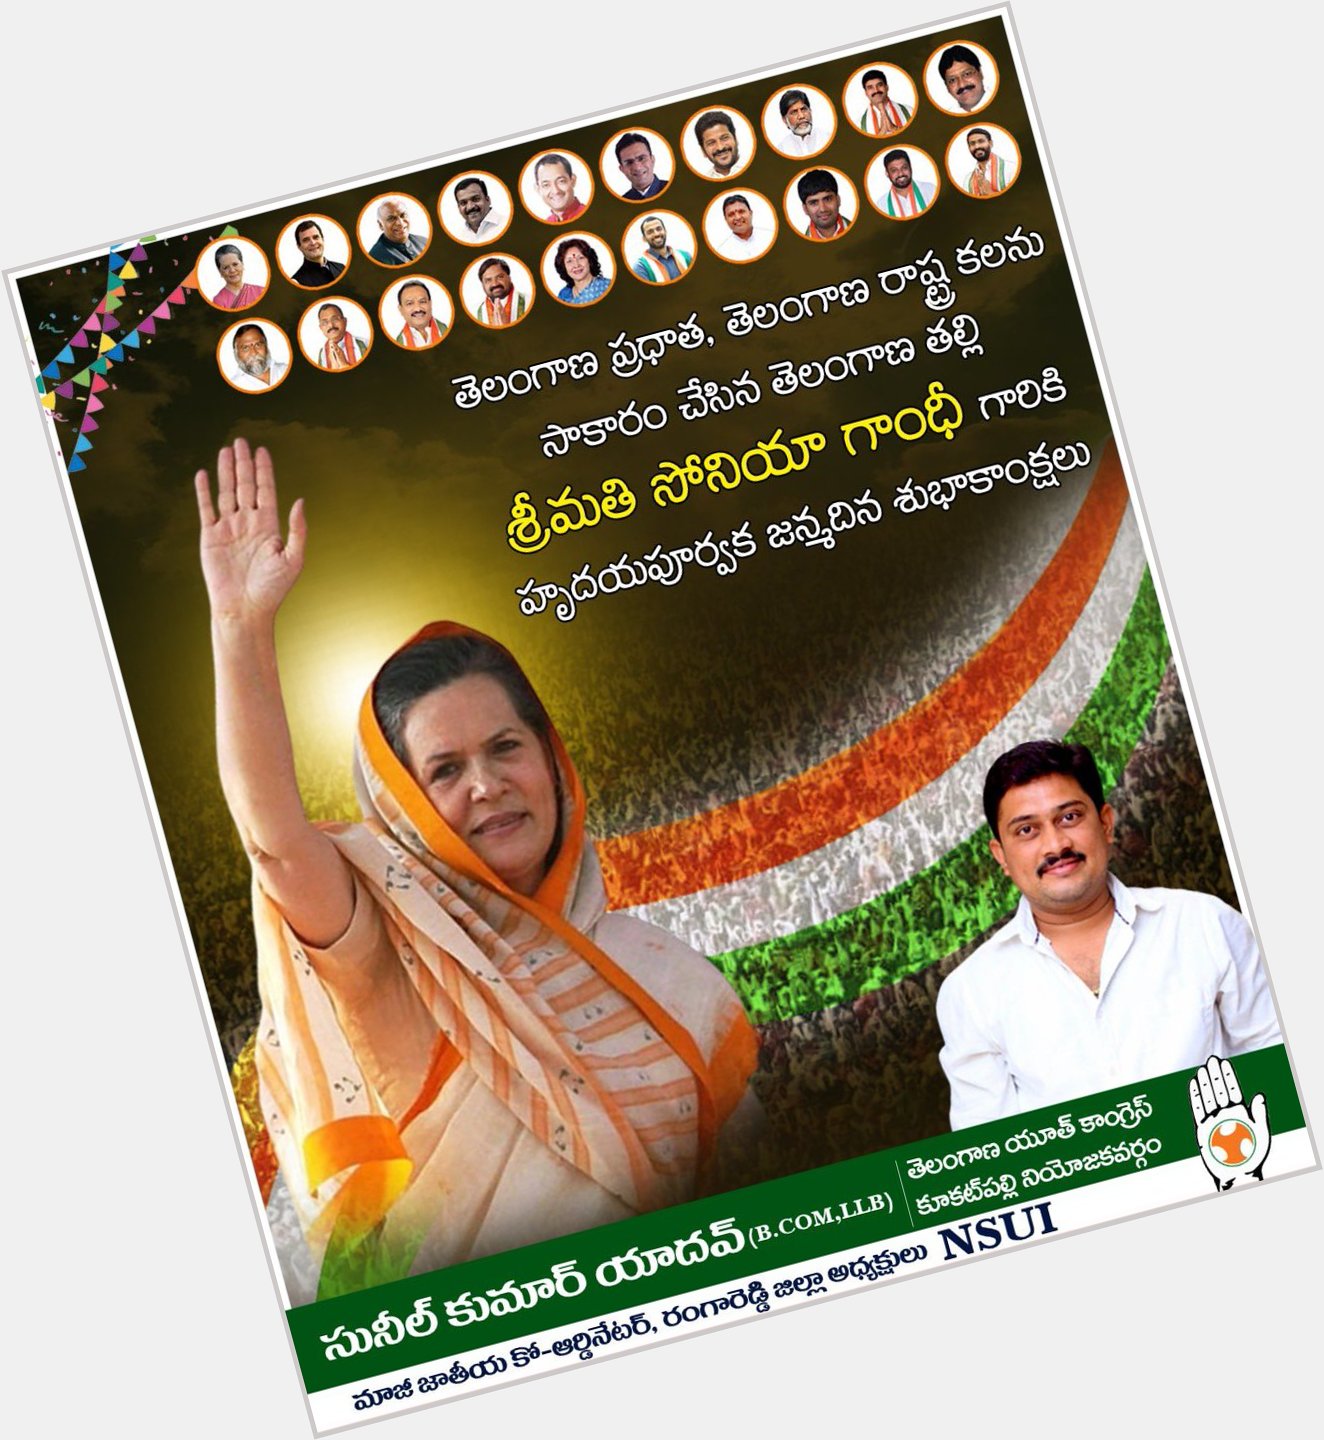 Wishing Smt Sonia Gandhi ji a very happy birthday. I wish her good health, happiness and success always. 